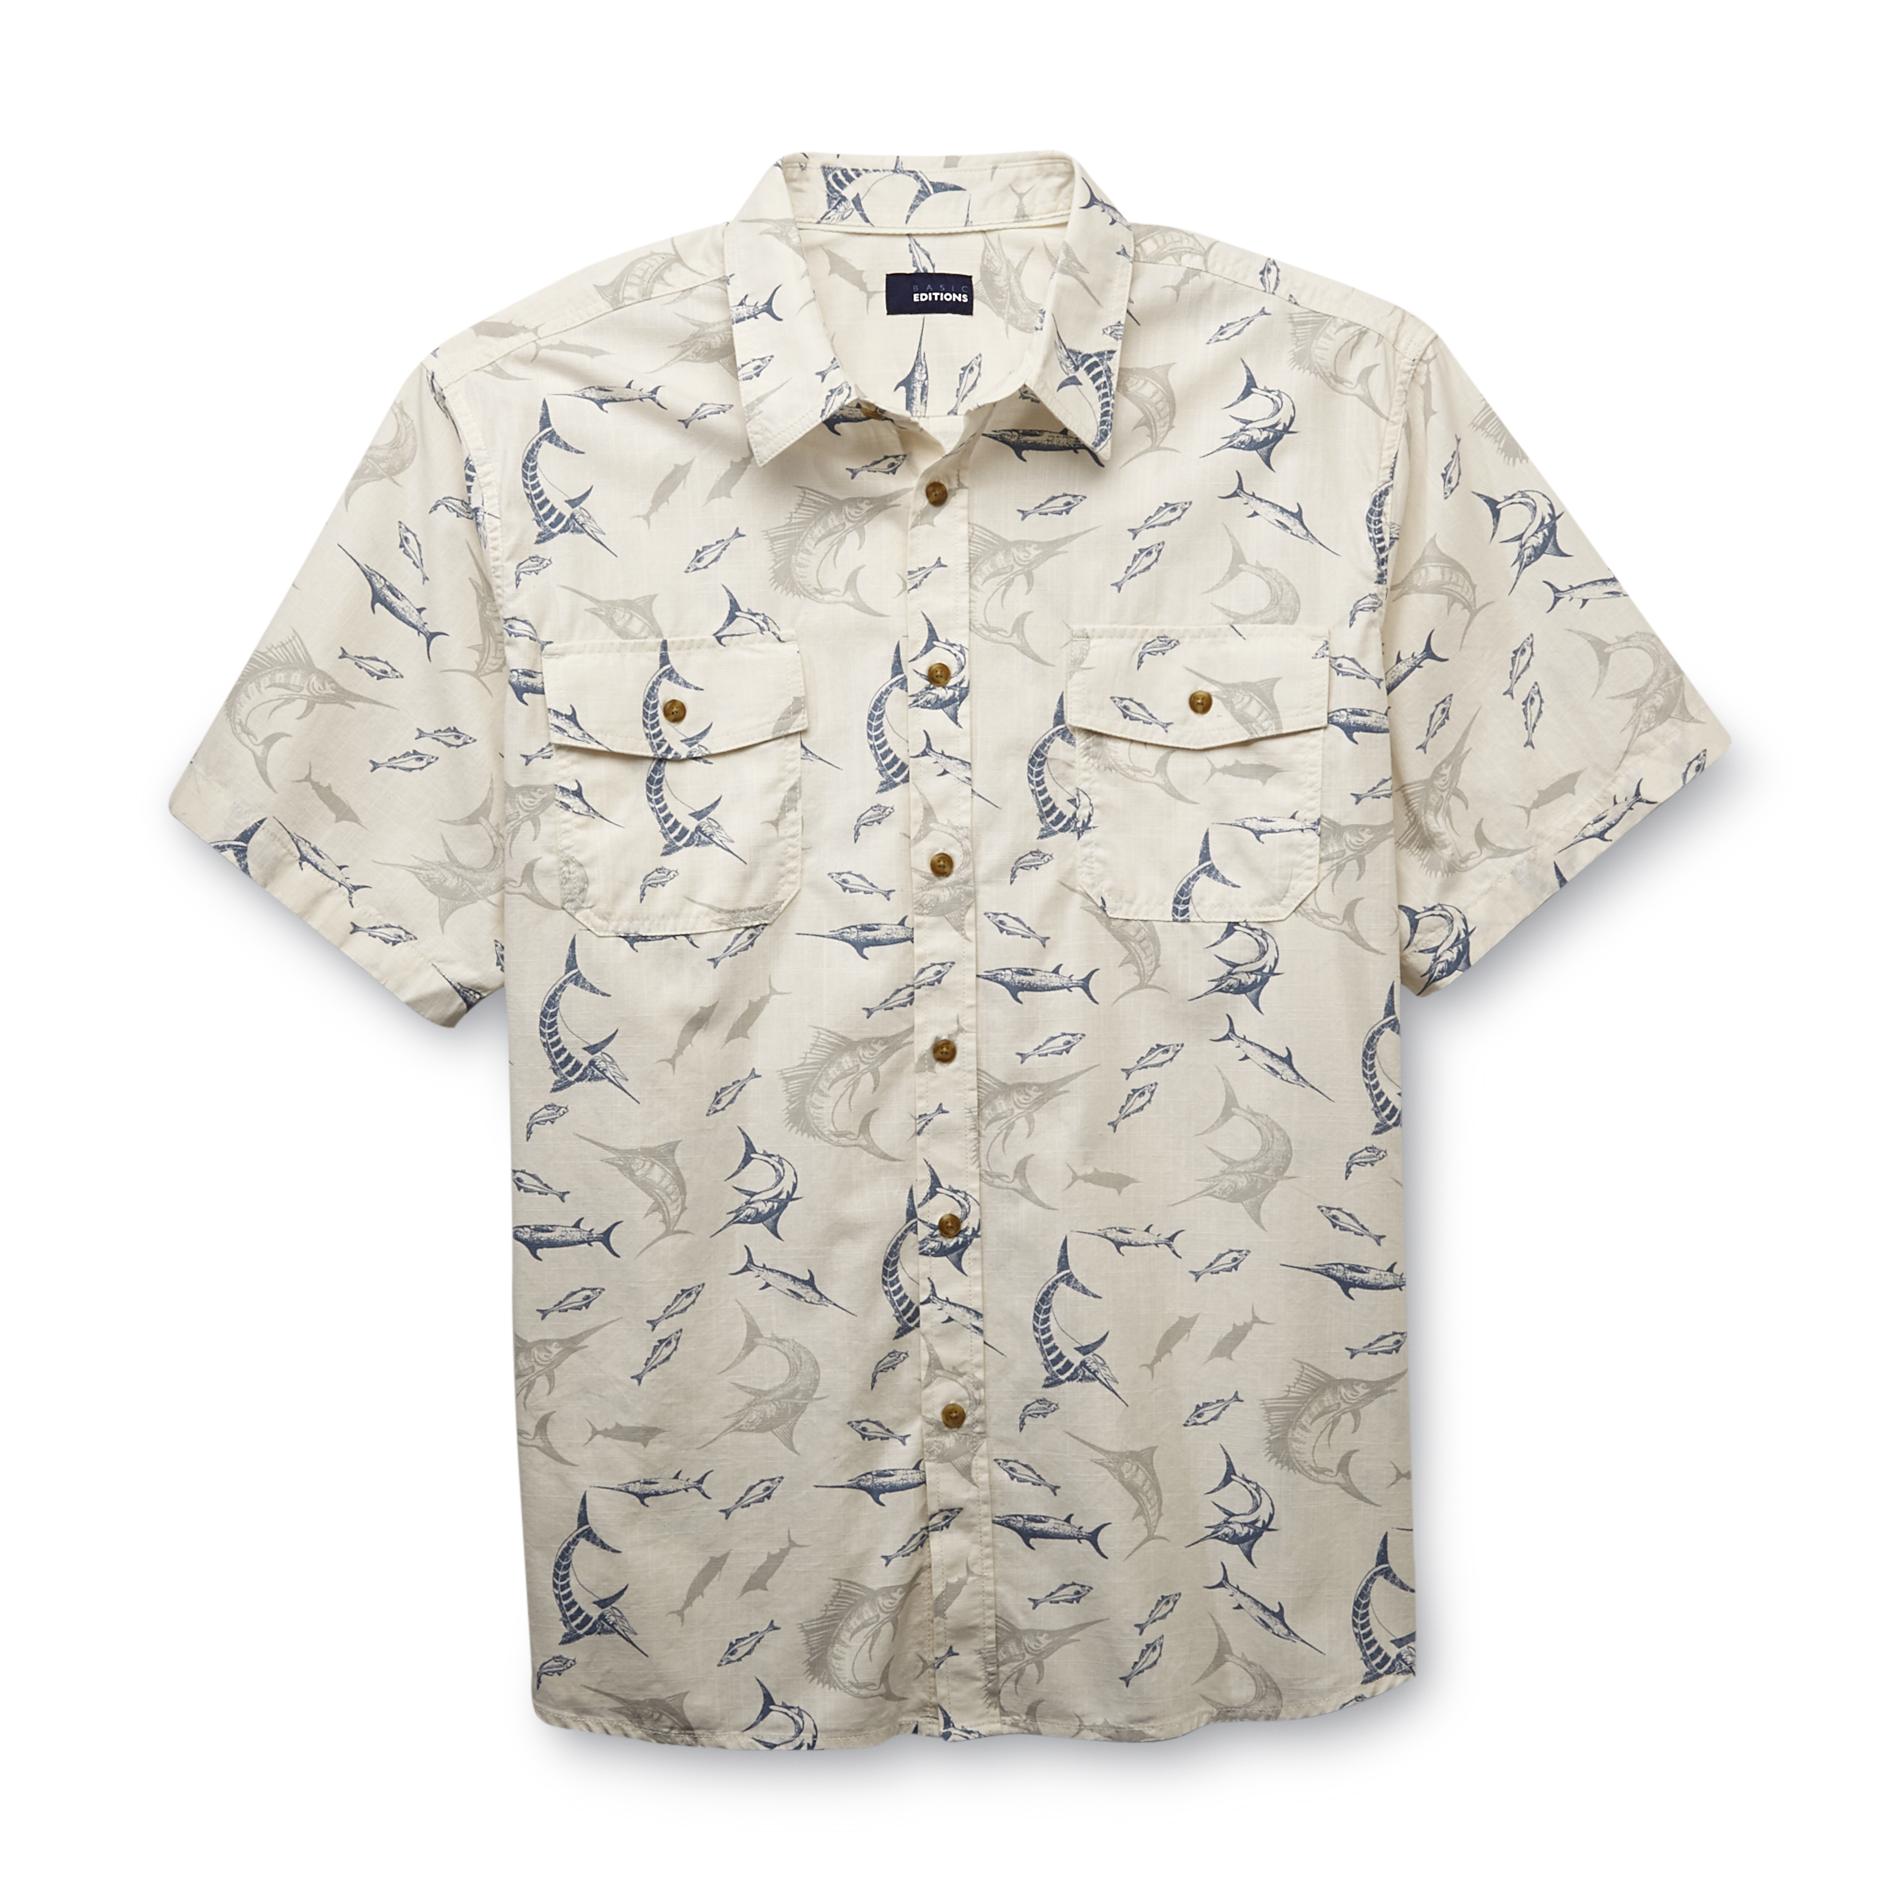 Basic Editions Men's Short-Sleeve Woven Shirt - Fish